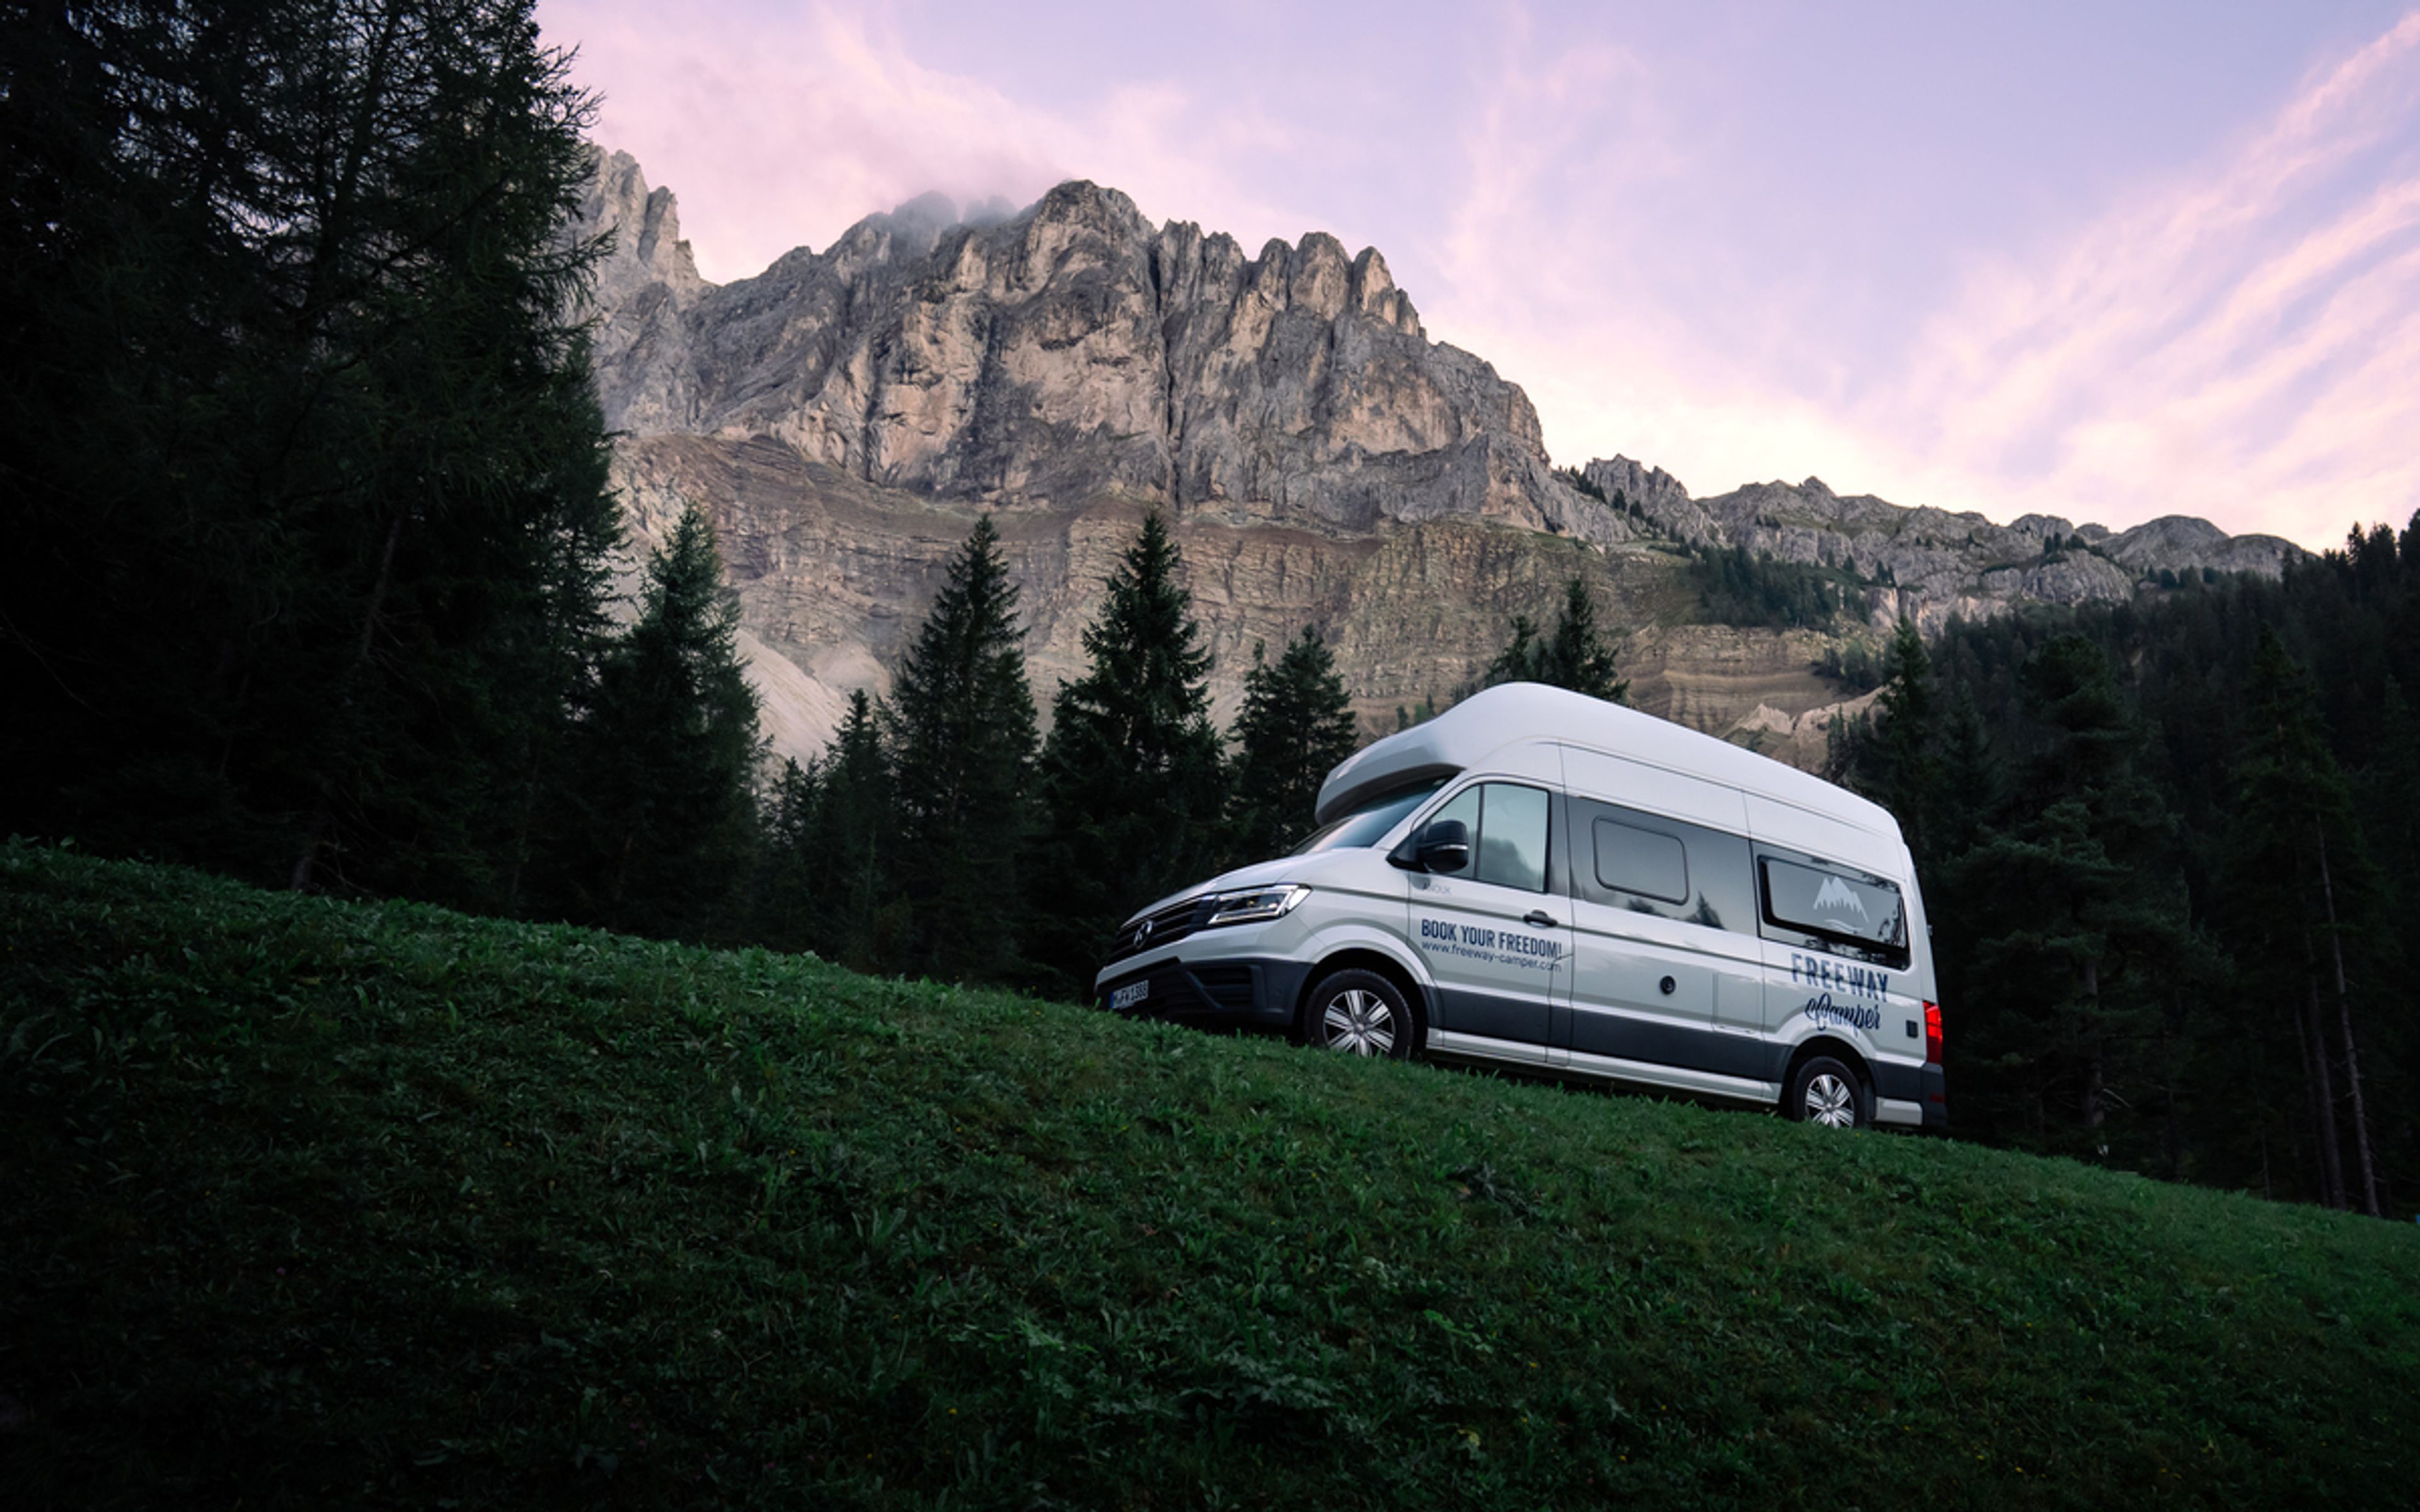 VW Grand California camper van among the Italian Alps, the Dolomites, Italy